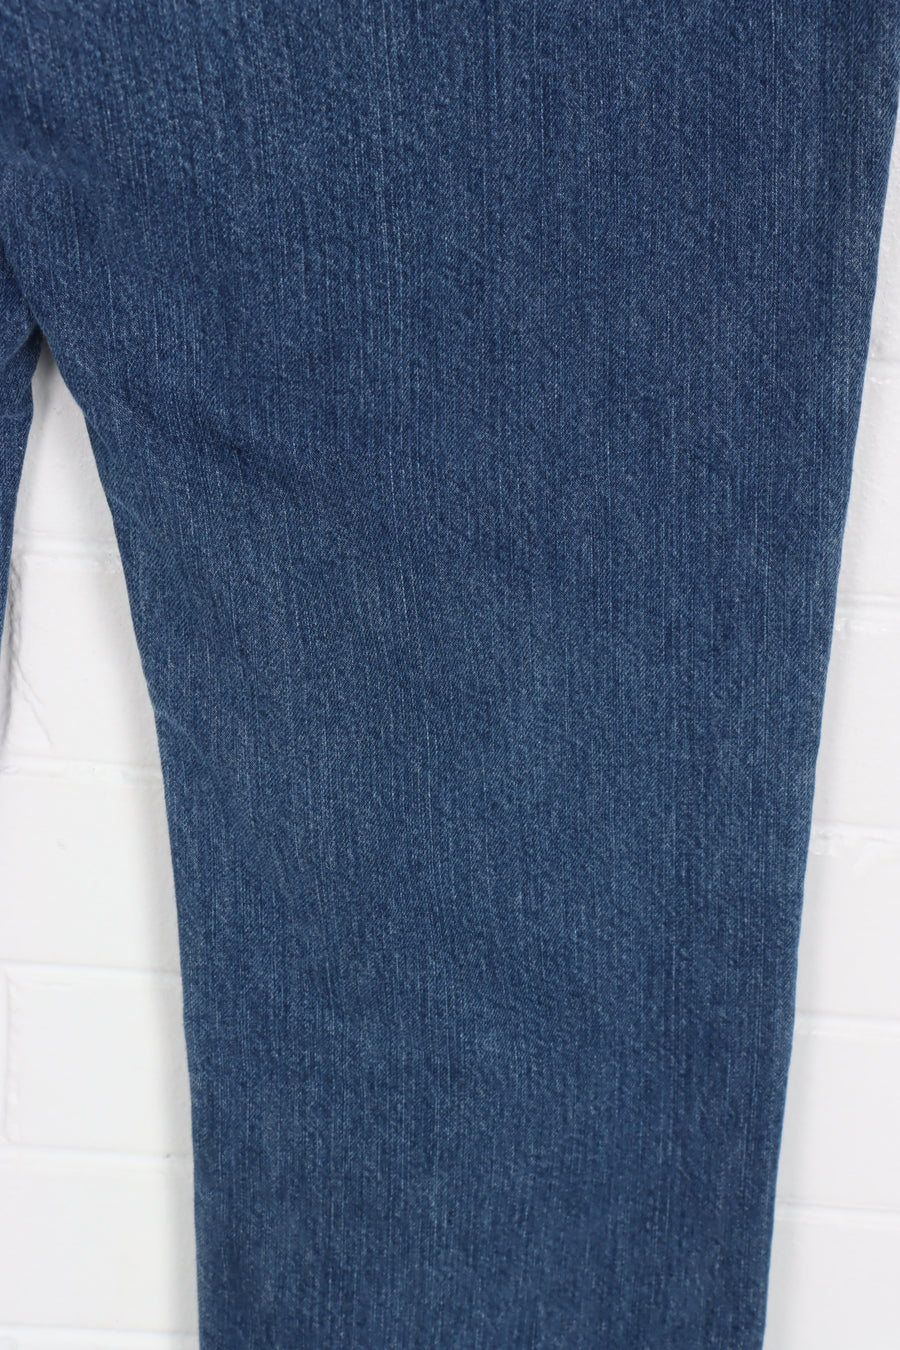 Vintage CARHARTT Denim Lined Jeans (Women's 8 x 28)